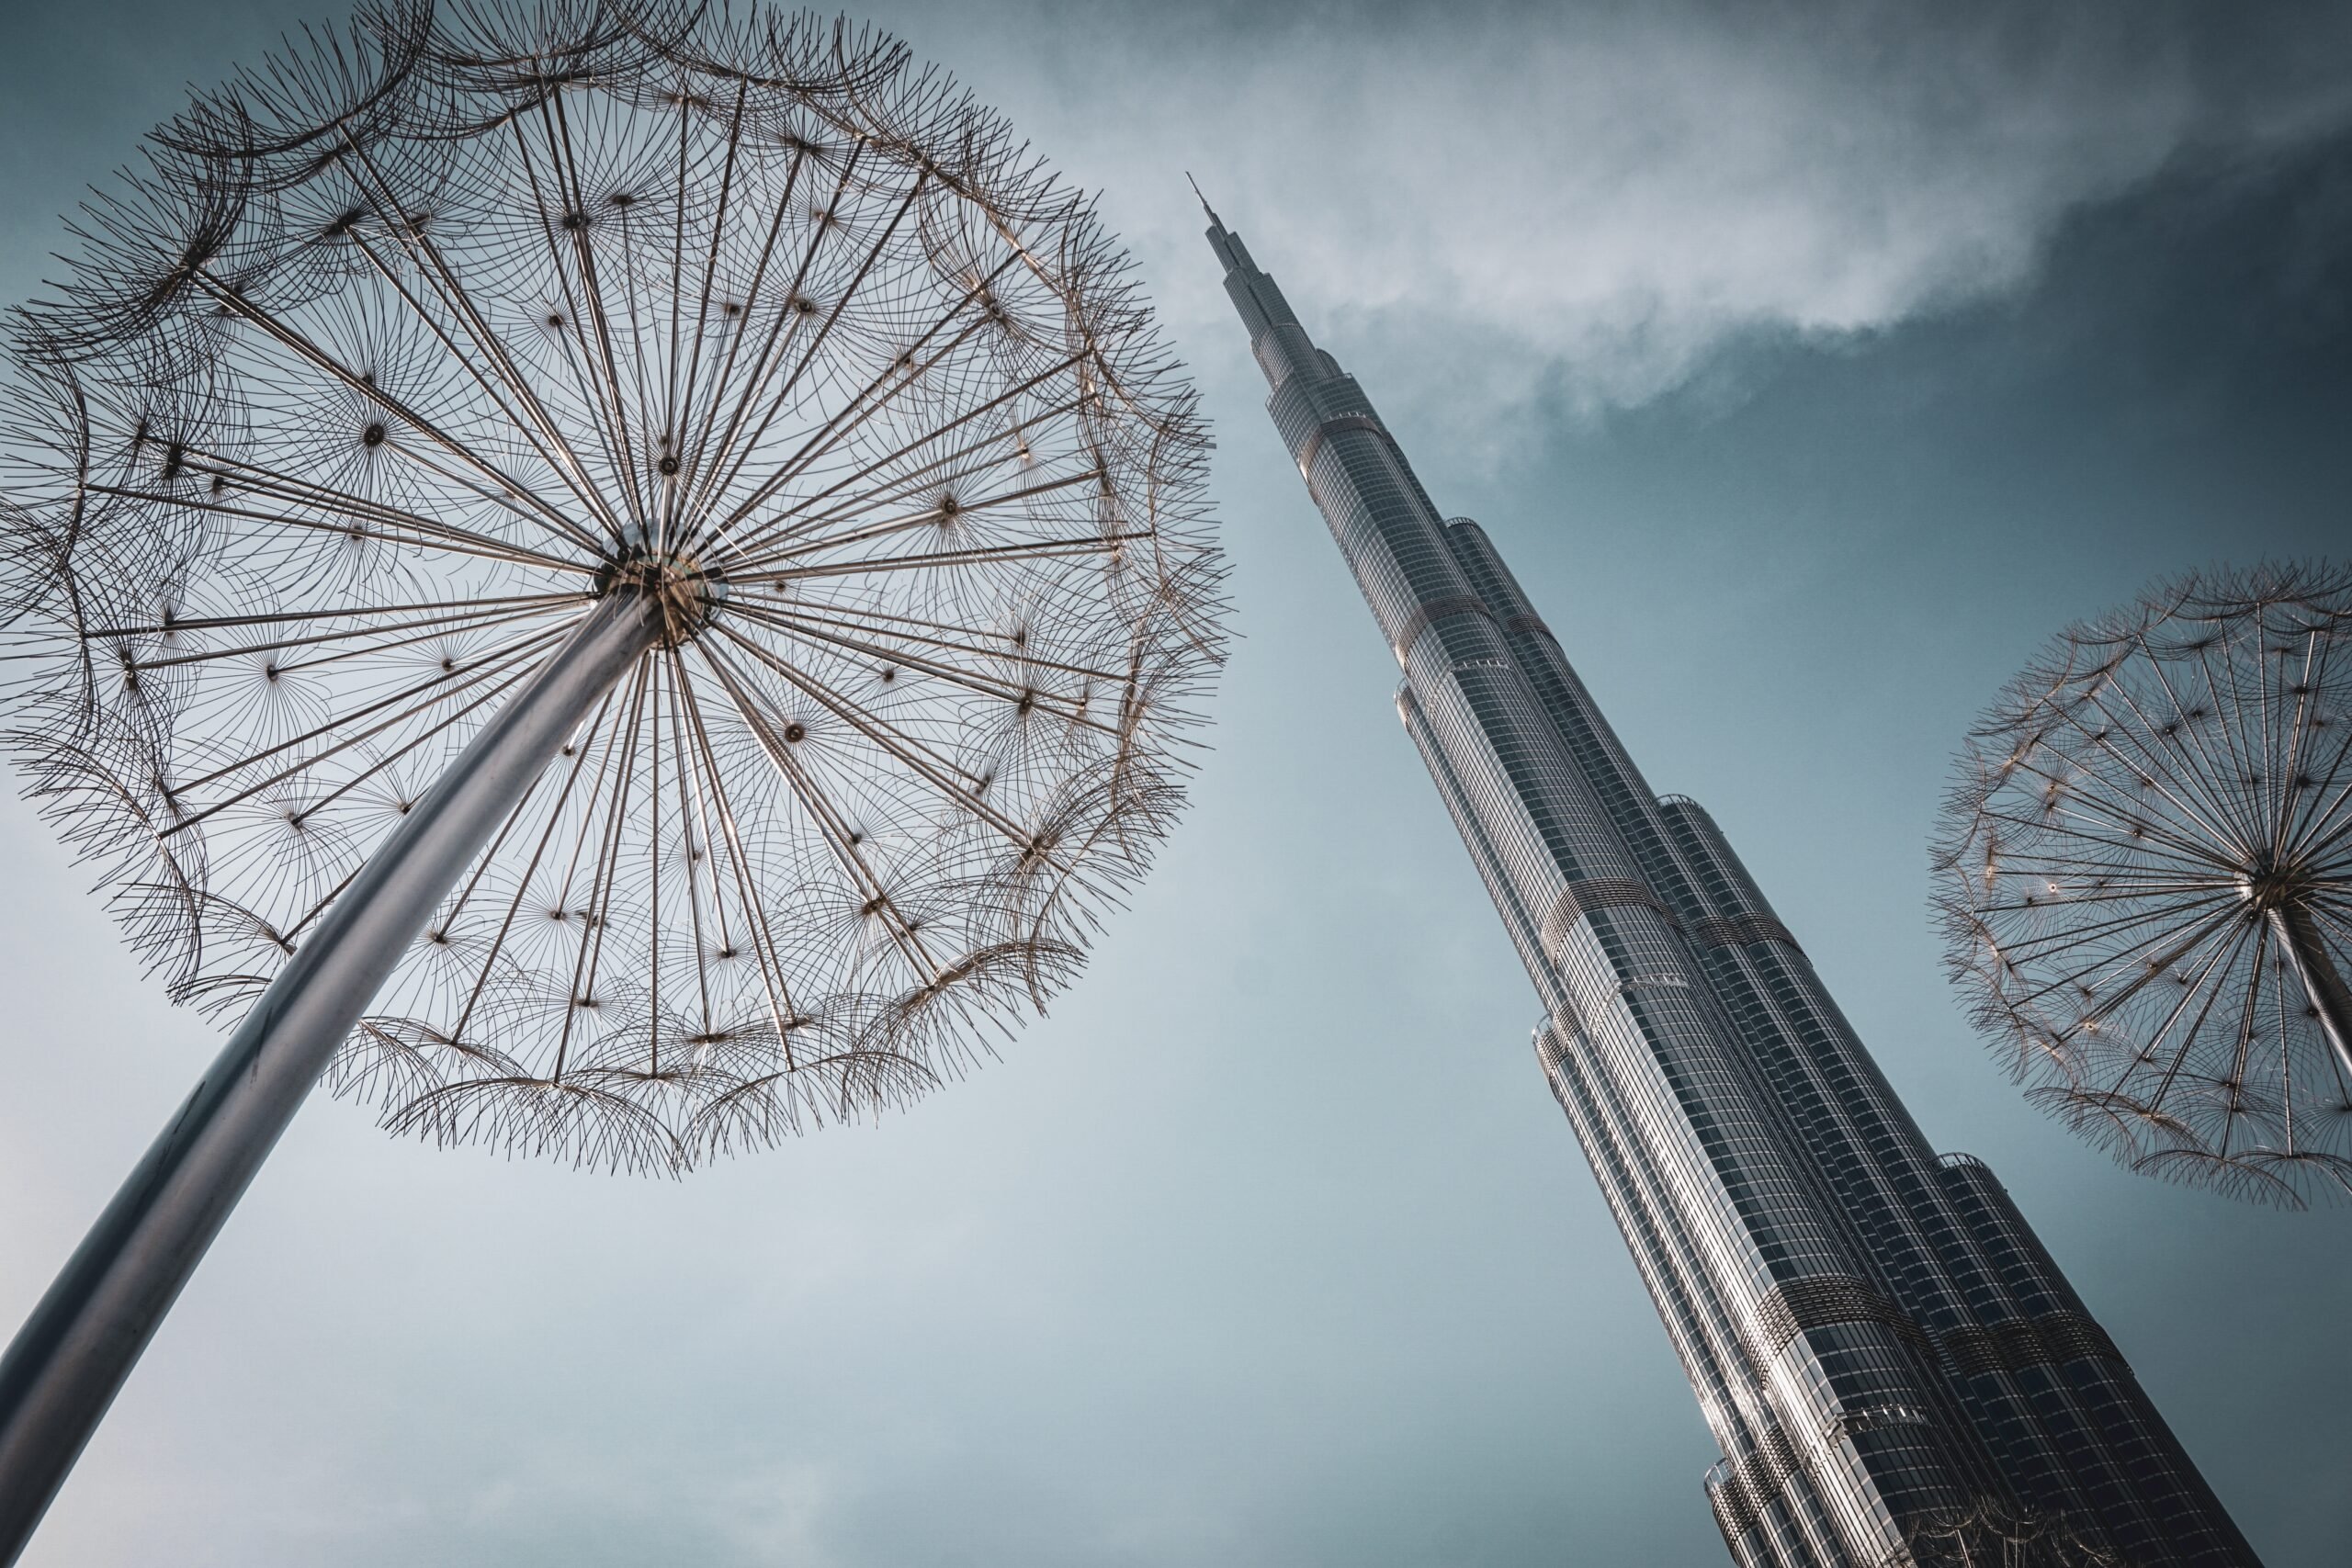 The Burj Khalifa towers over a piece of public art